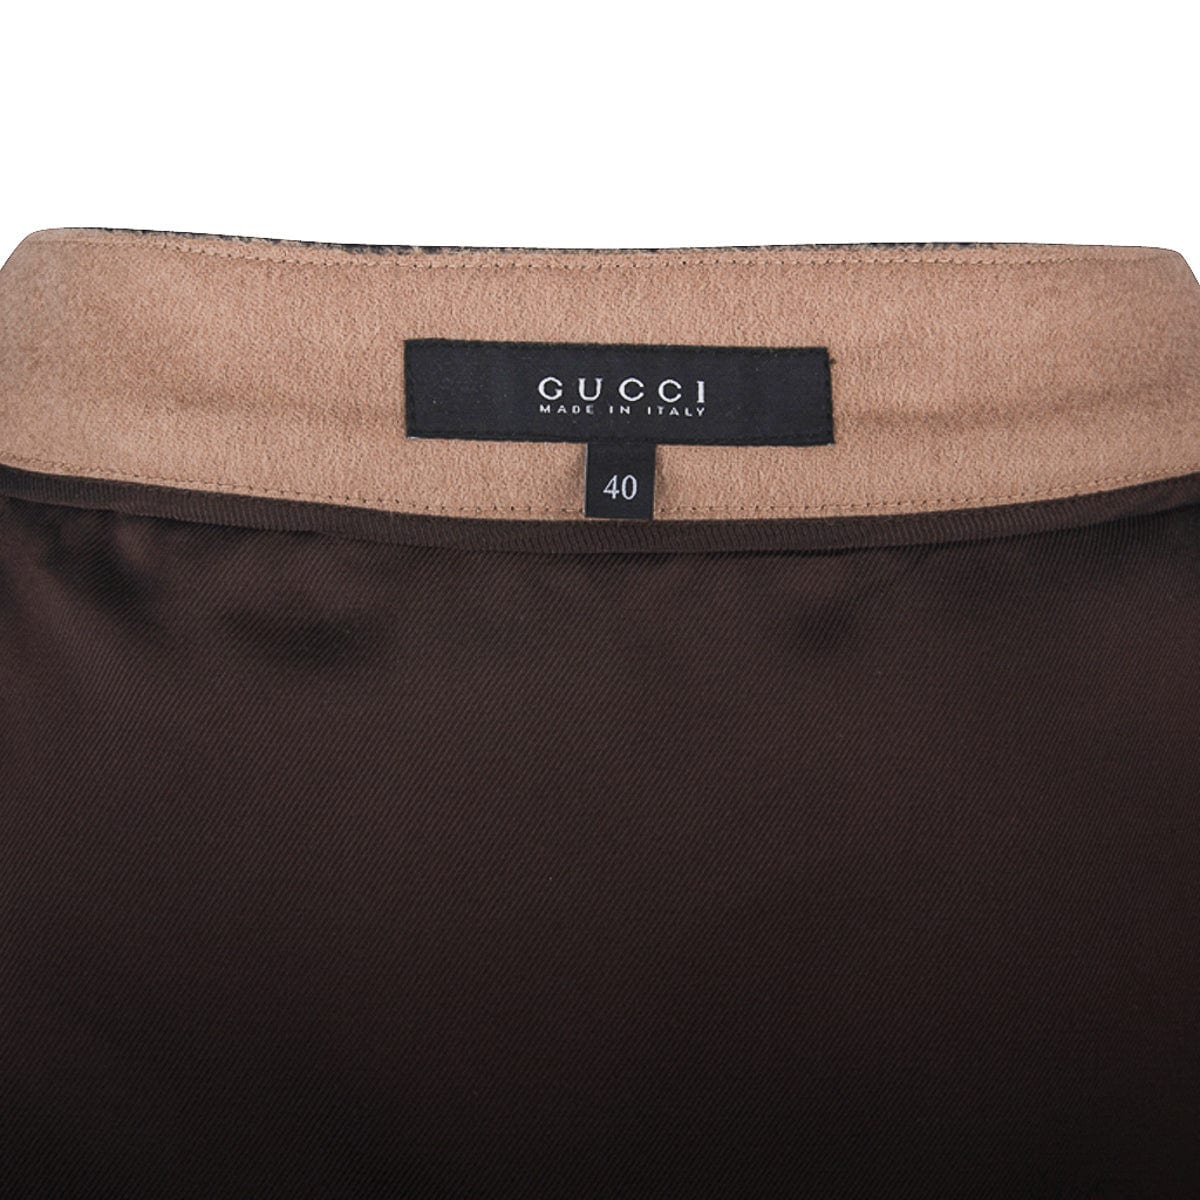 Gucci Skirt Camel Hair Leather Trim Front Zipper 40 / 6